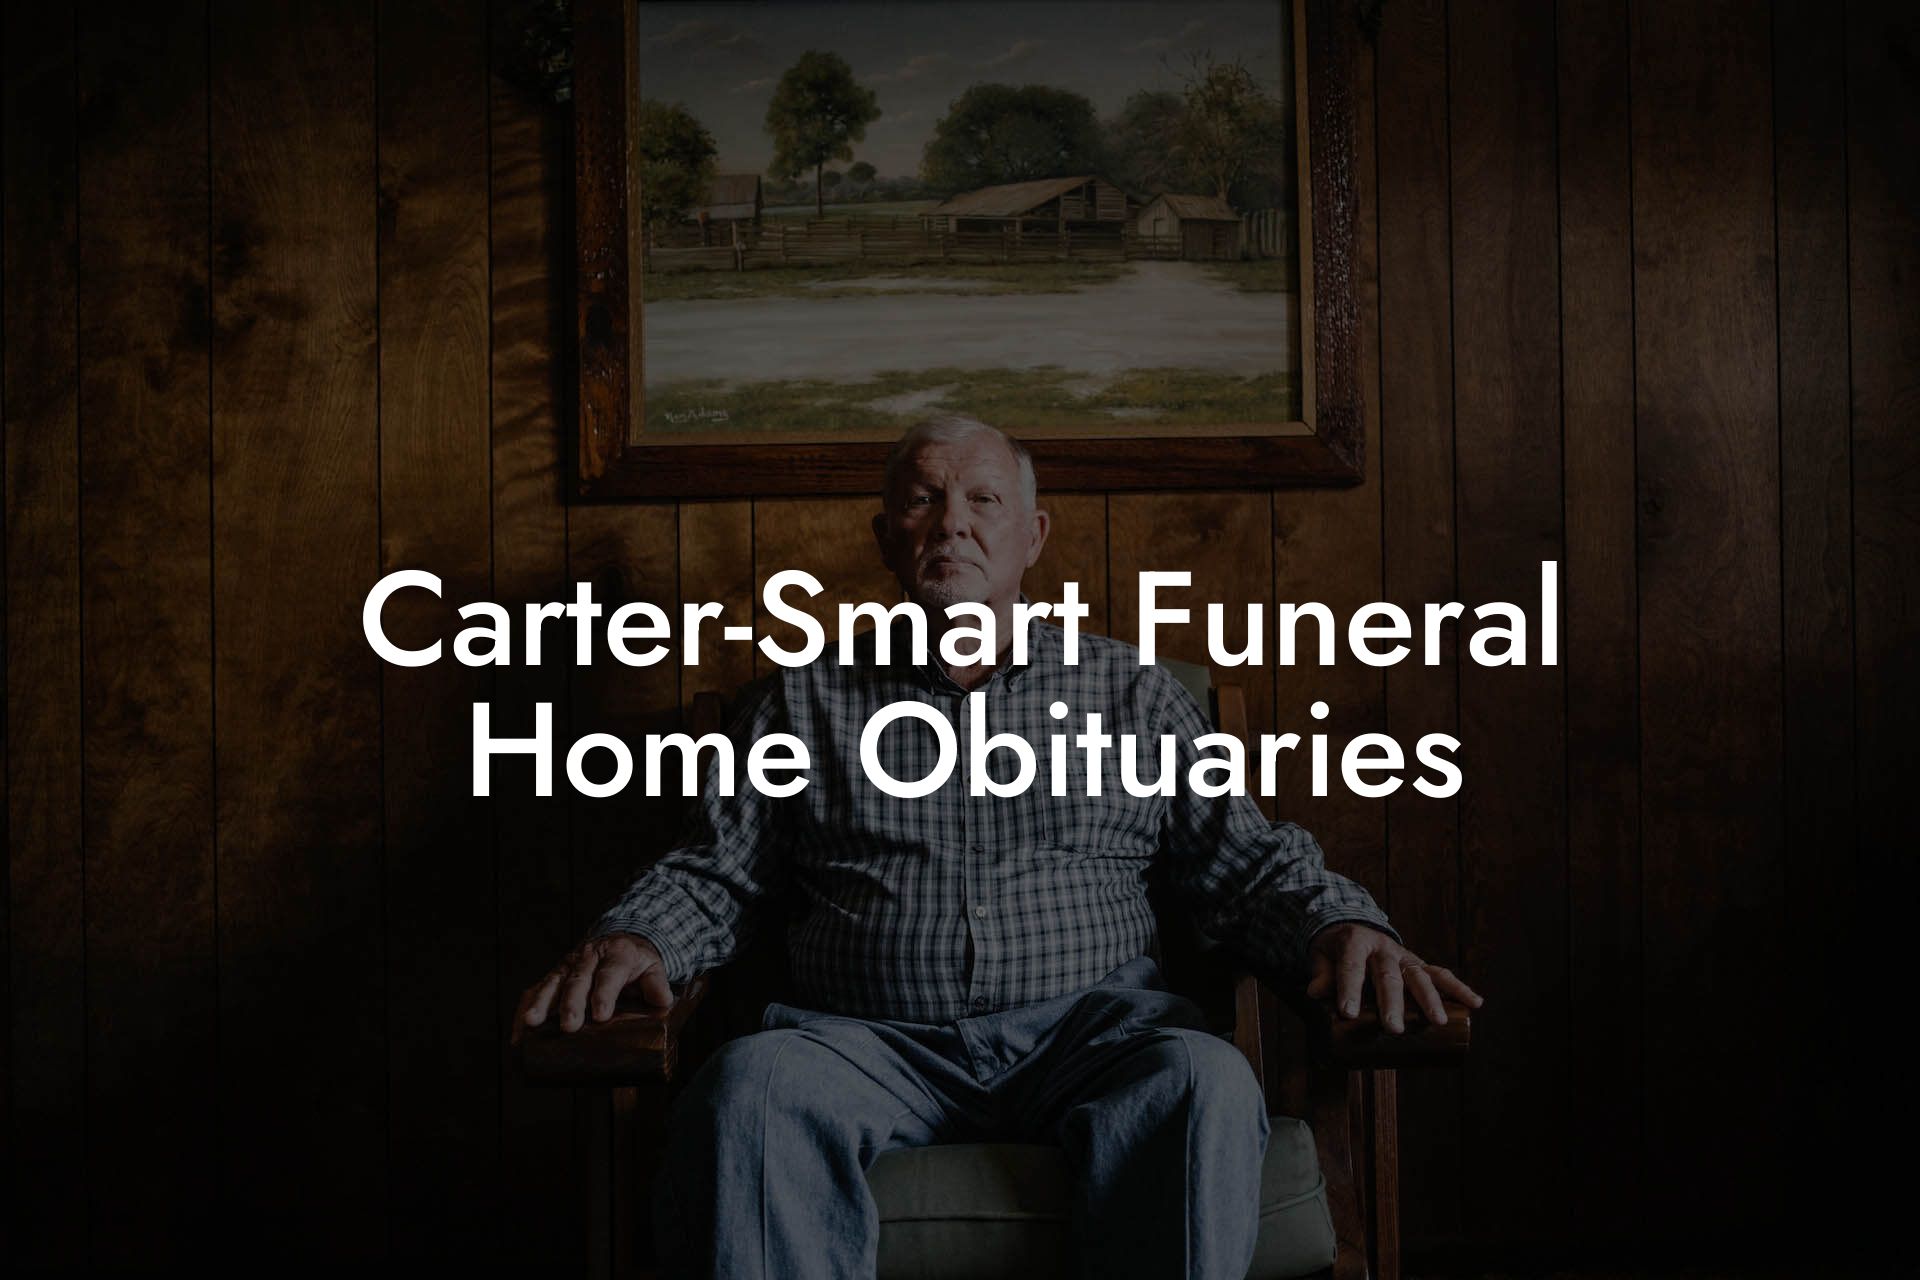 Carter-Smart Funeral Home Obituaries